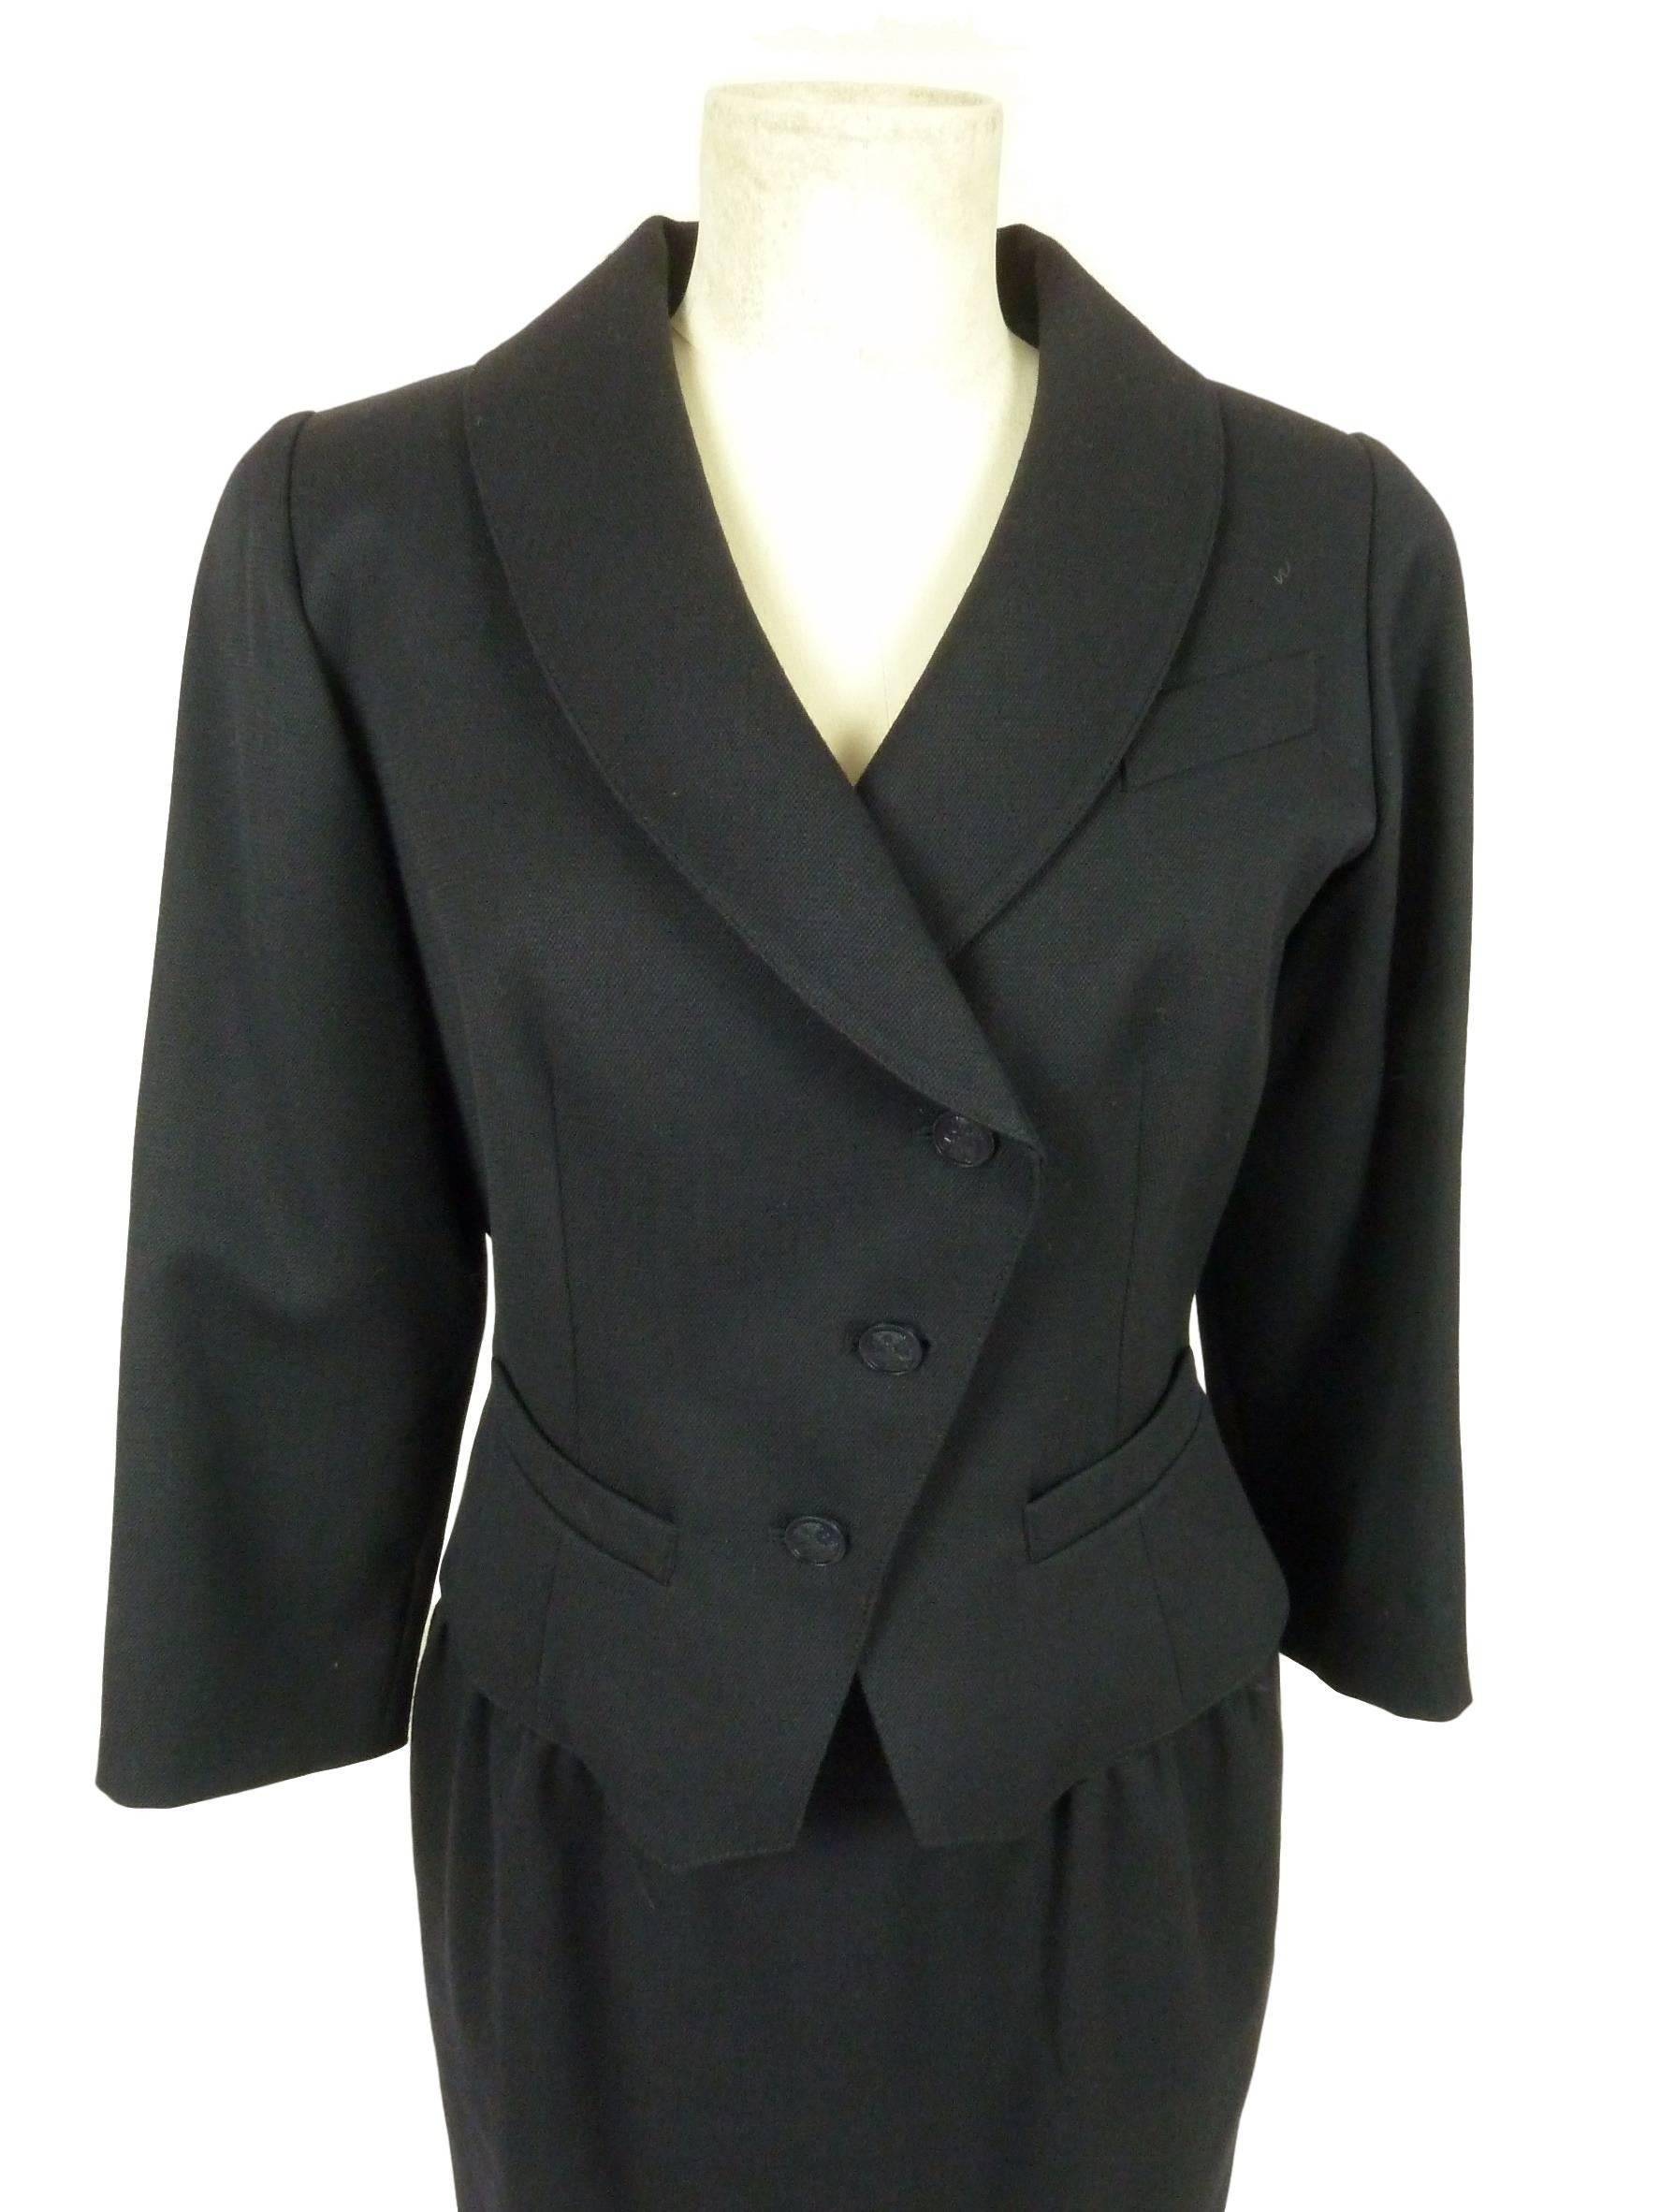 Set dress vintage 1980s Fendi 365 skirt and jacket. Double breasted jacket, skirt with tucks at waist. Logoed buttons. 

Size: 44 (IT) = 38 (DE/NL). 

Jacket. 
Shoulder: 42 cm. 
Armpit to armpit: 46 cm. 
Sleeve: 50 cm. 
Length: 56 cm. 

Skirt.